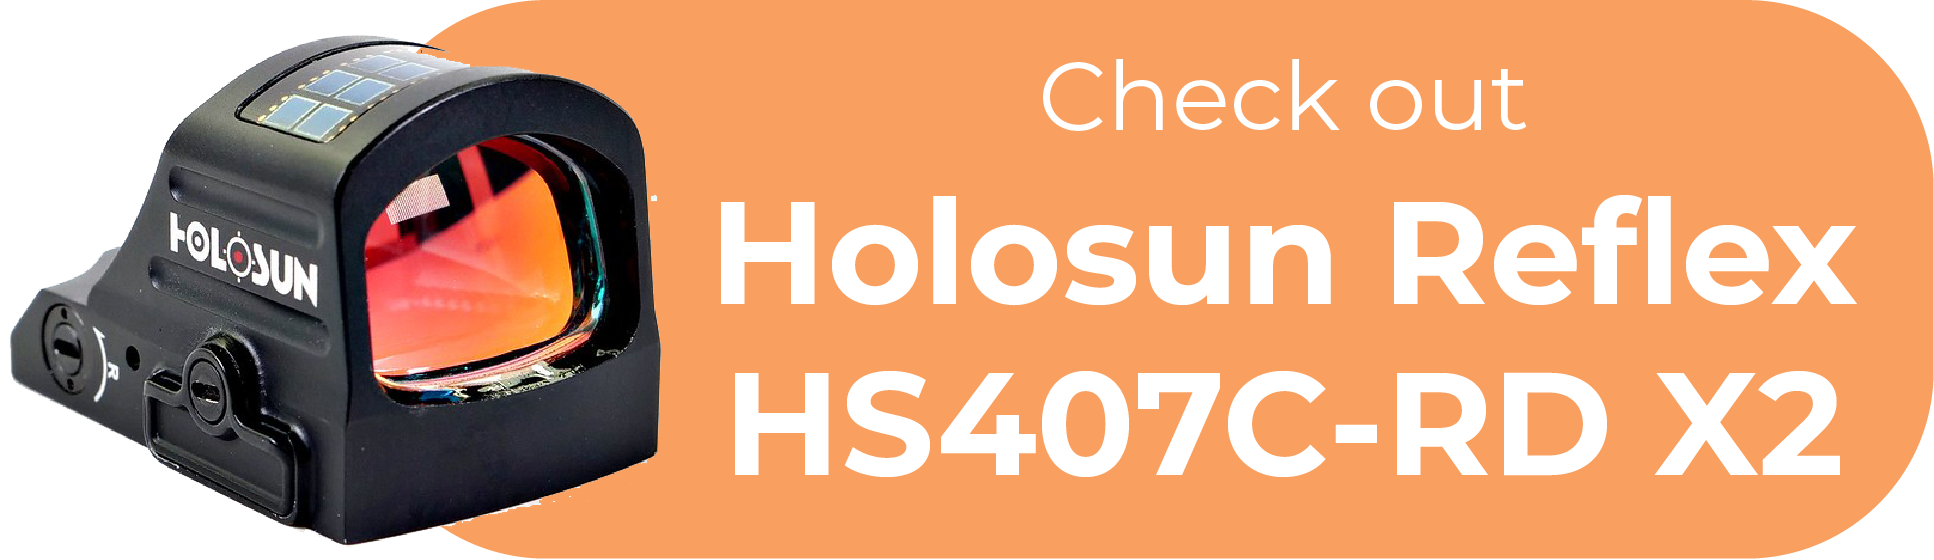 Holosun Reflex HS407C-RD X2 cta